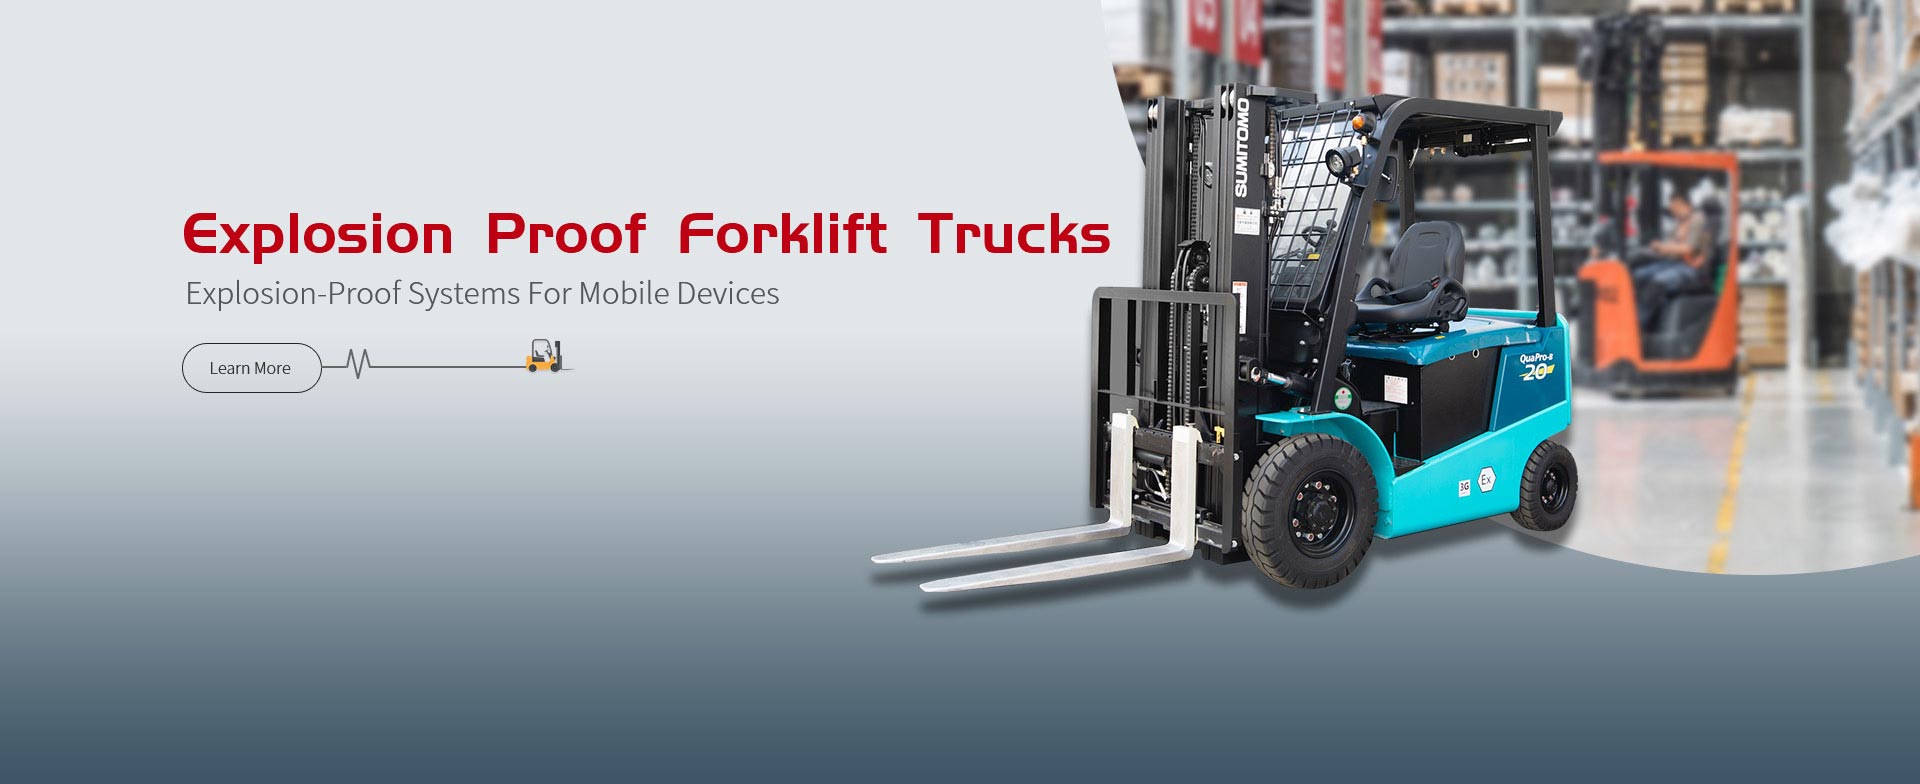 Explosion Proof Forklift Trucks